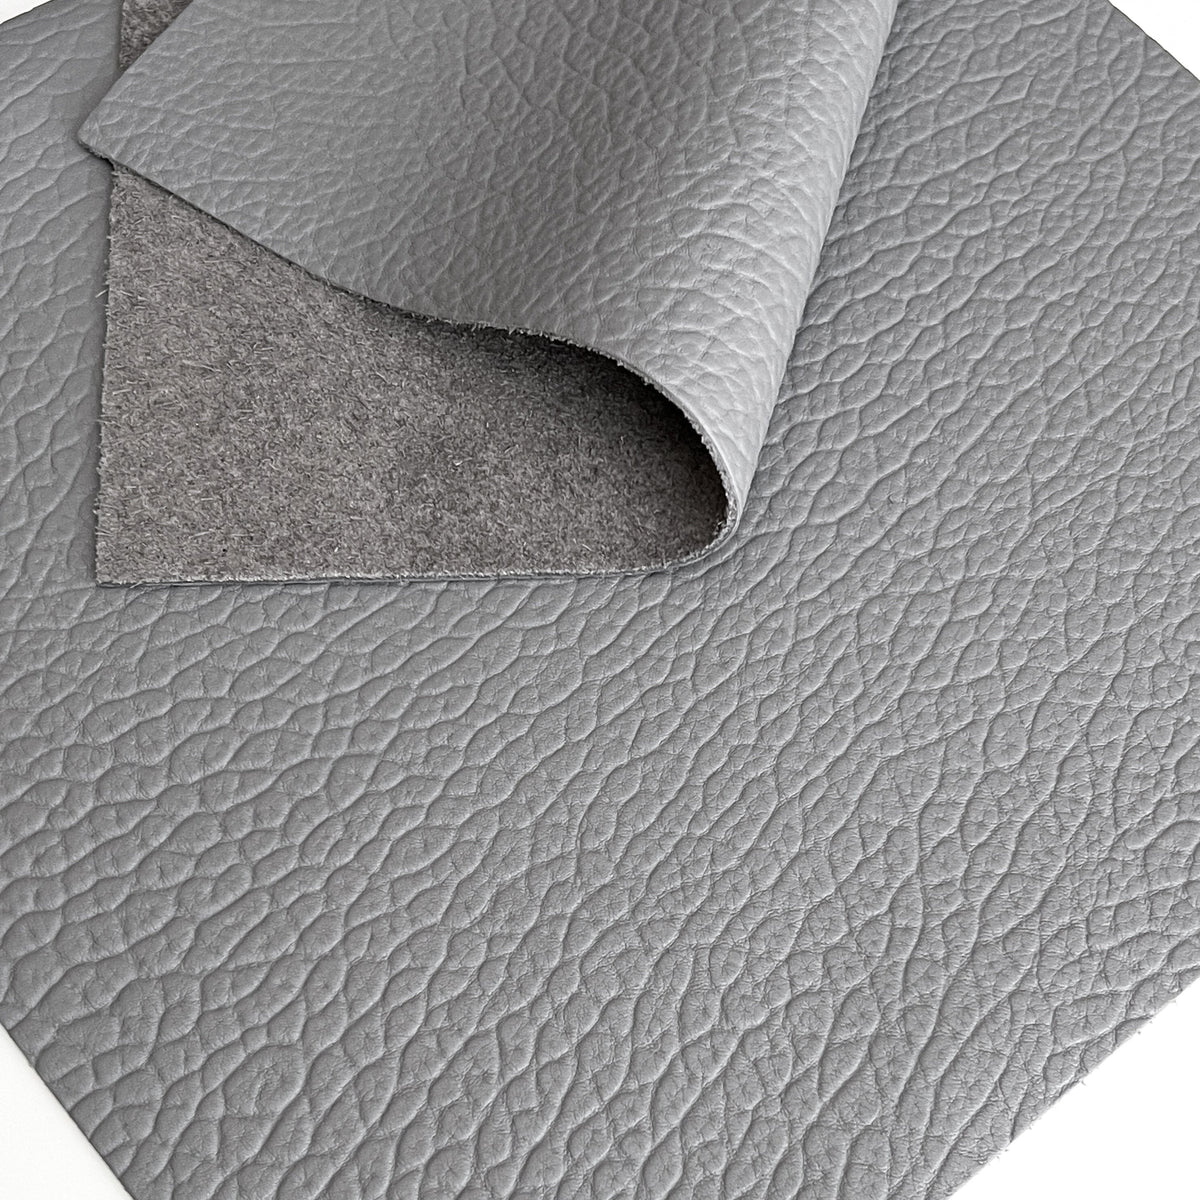 Slate Gray Pebble Grain Textured Faux Leather Vinyl Fabric